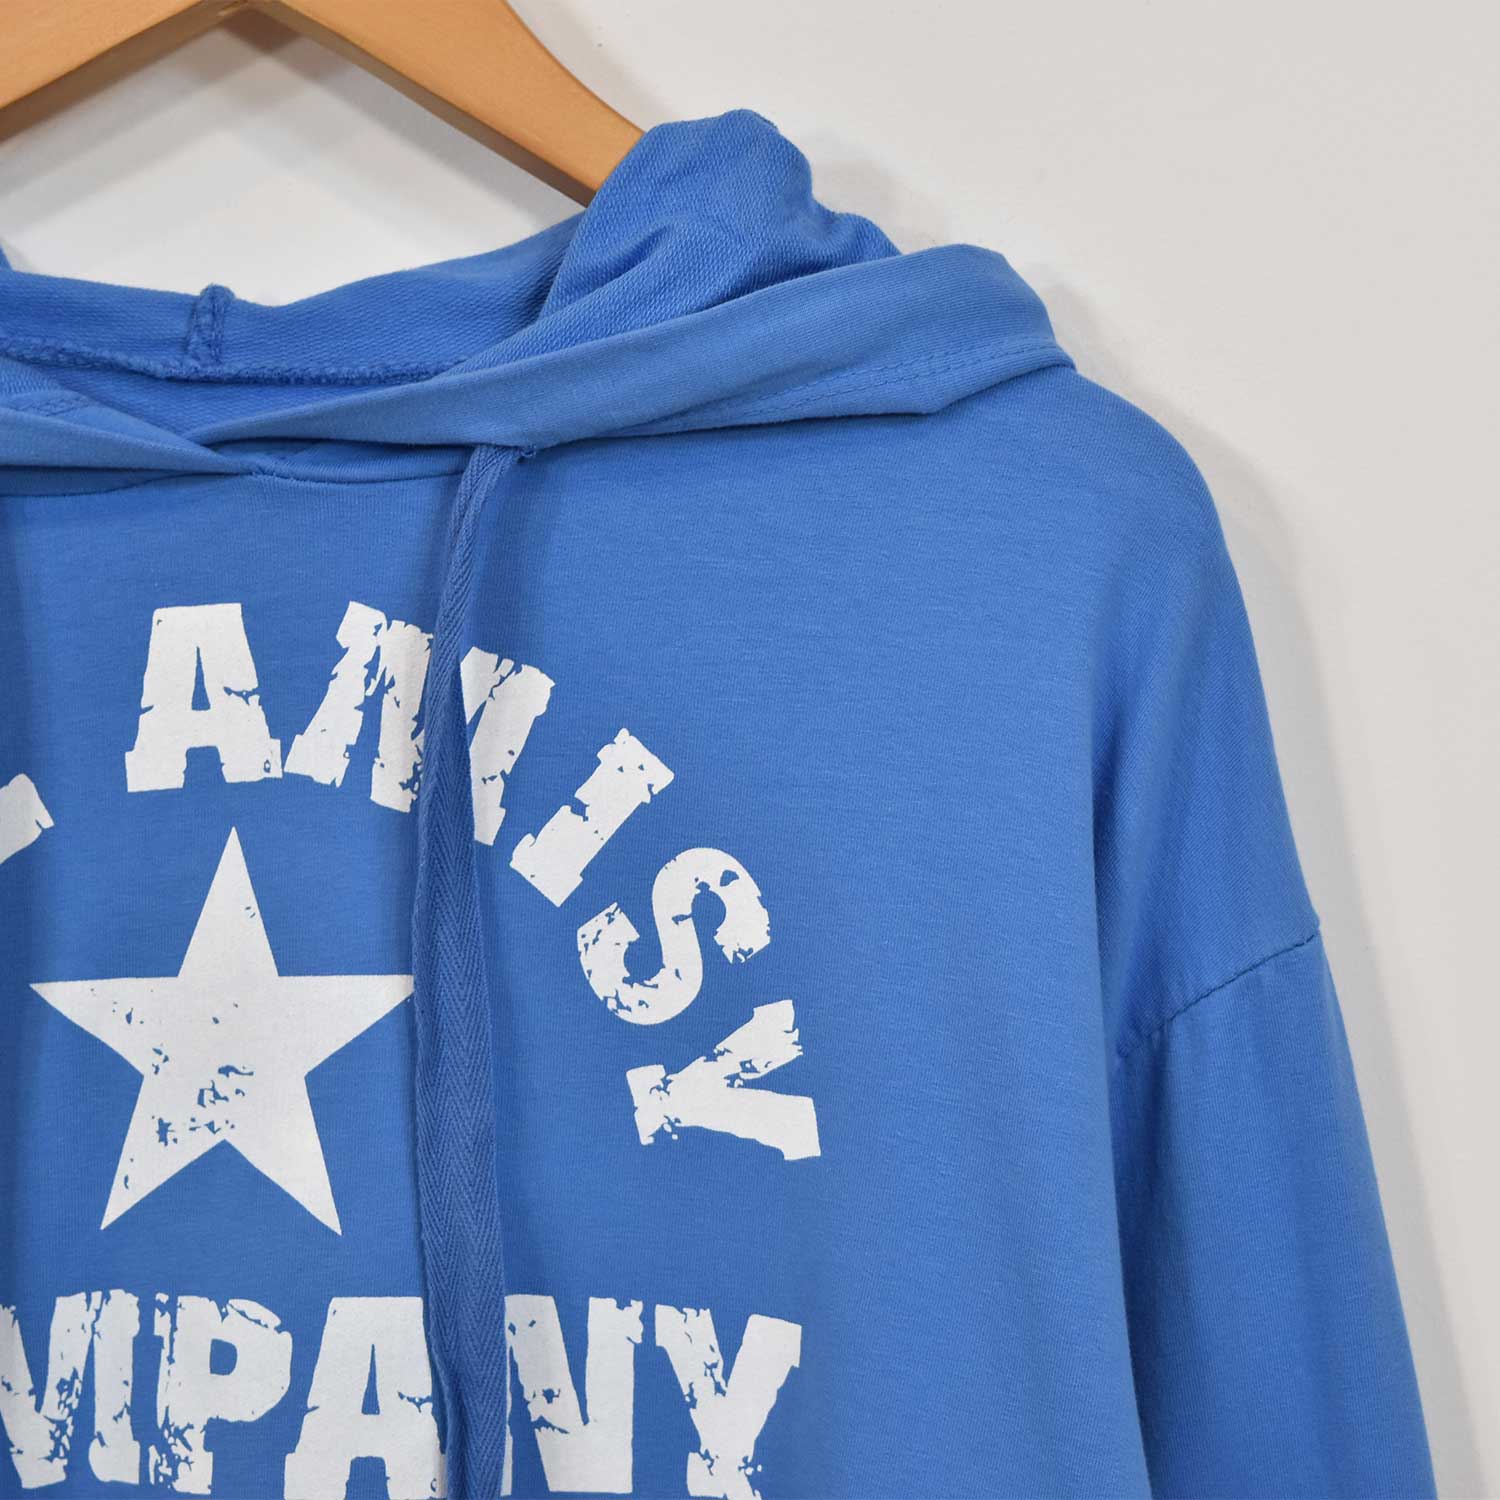 Blue hood Amisy sweatshirt